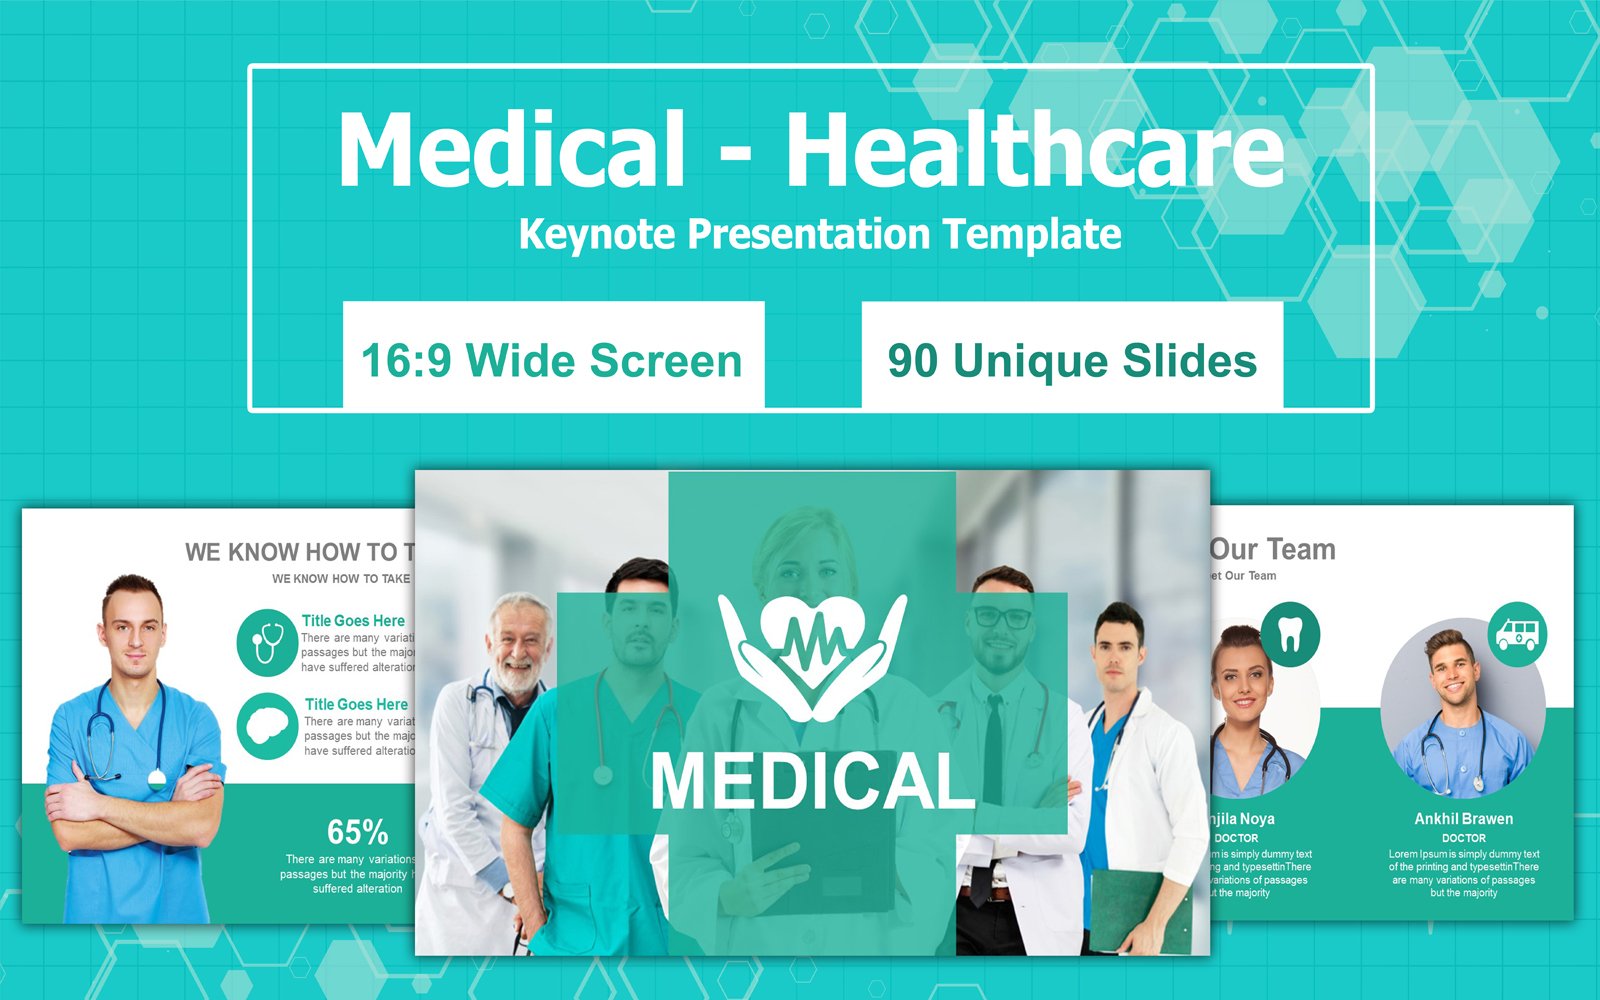 Medical - Healthcare Keynote Presentation Template